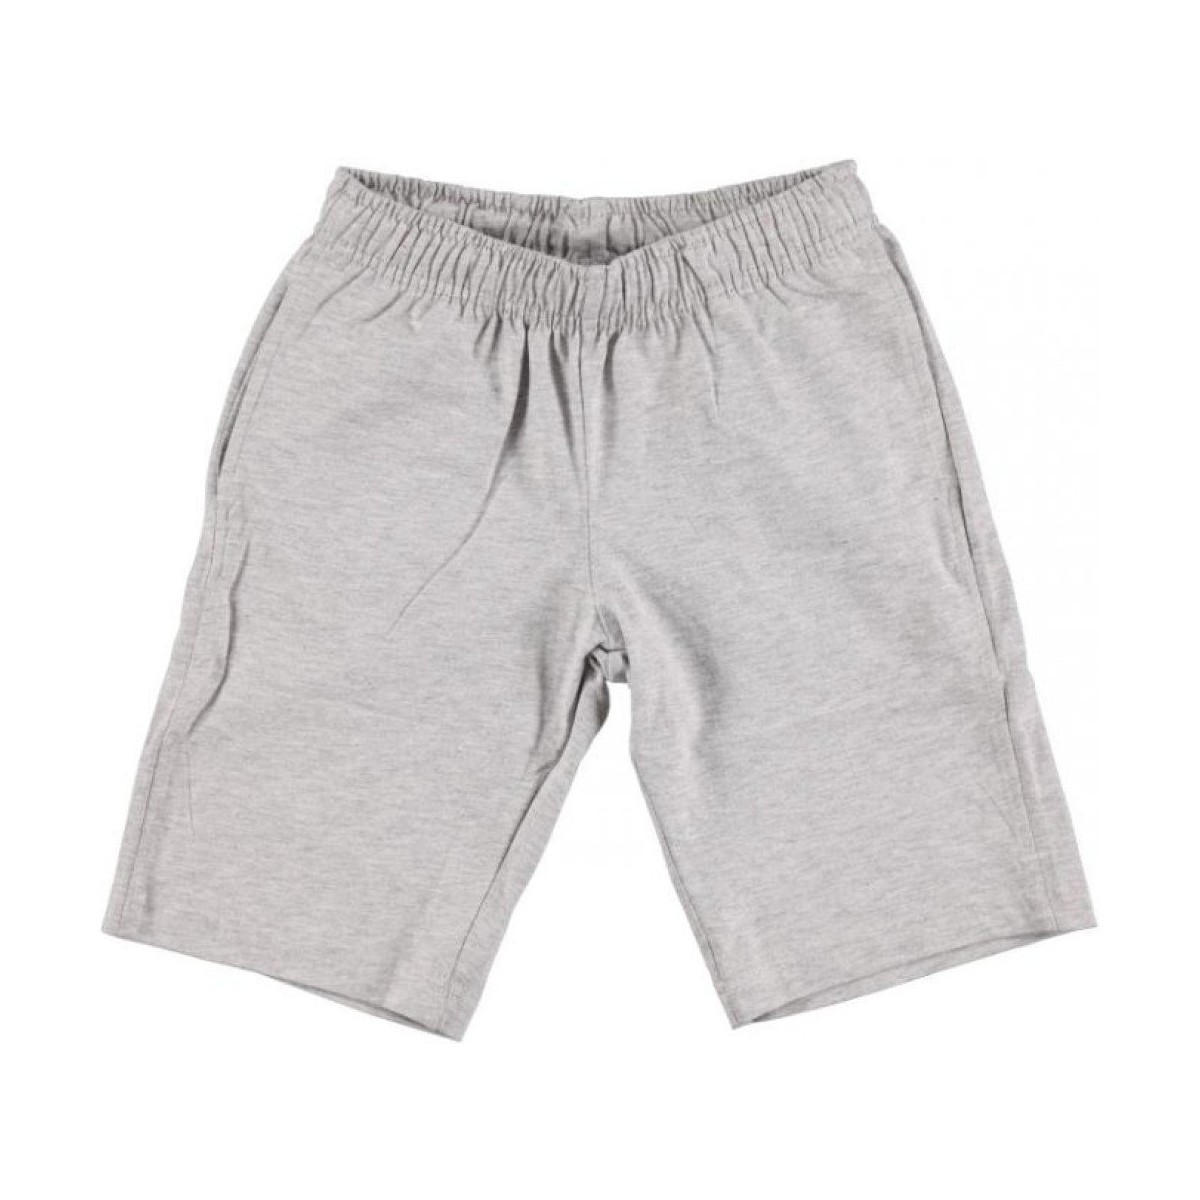 Abbigliamento Unisex bambino Shorts / Bermuda Get Fit Short Jersey bambino Grigio